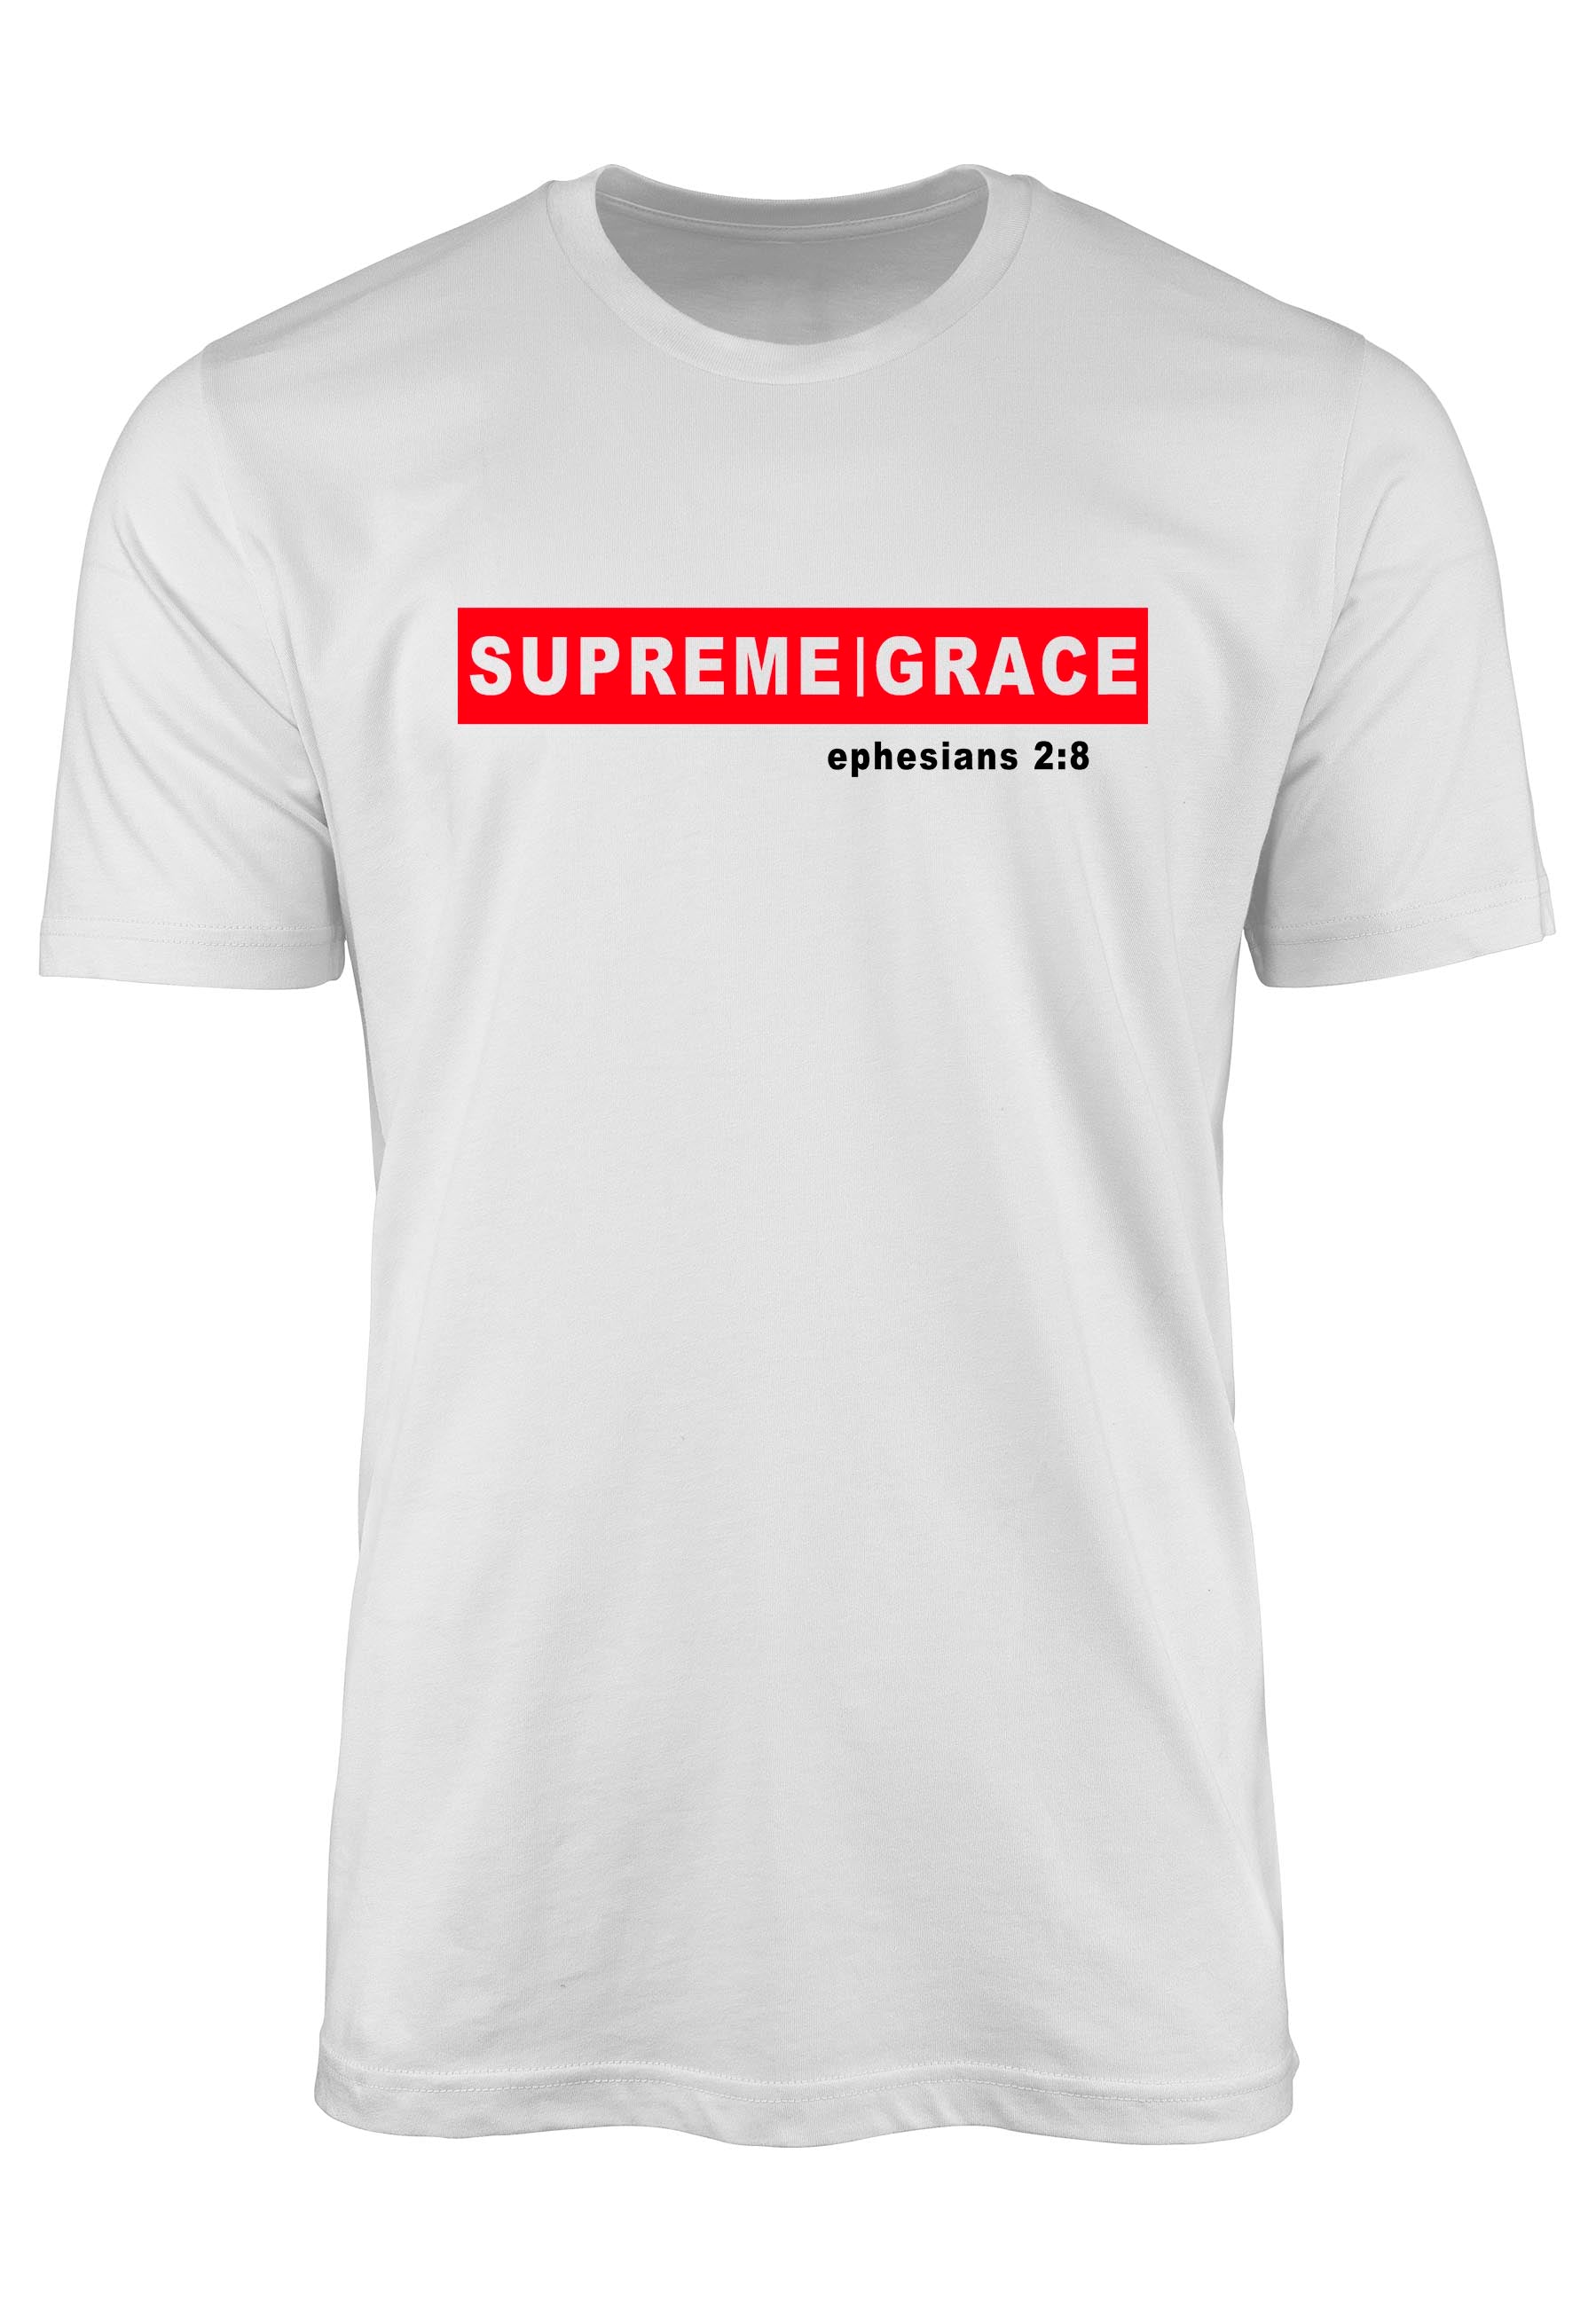 Christian t-shirt Supreme Grace featuring Ephesians 2:8